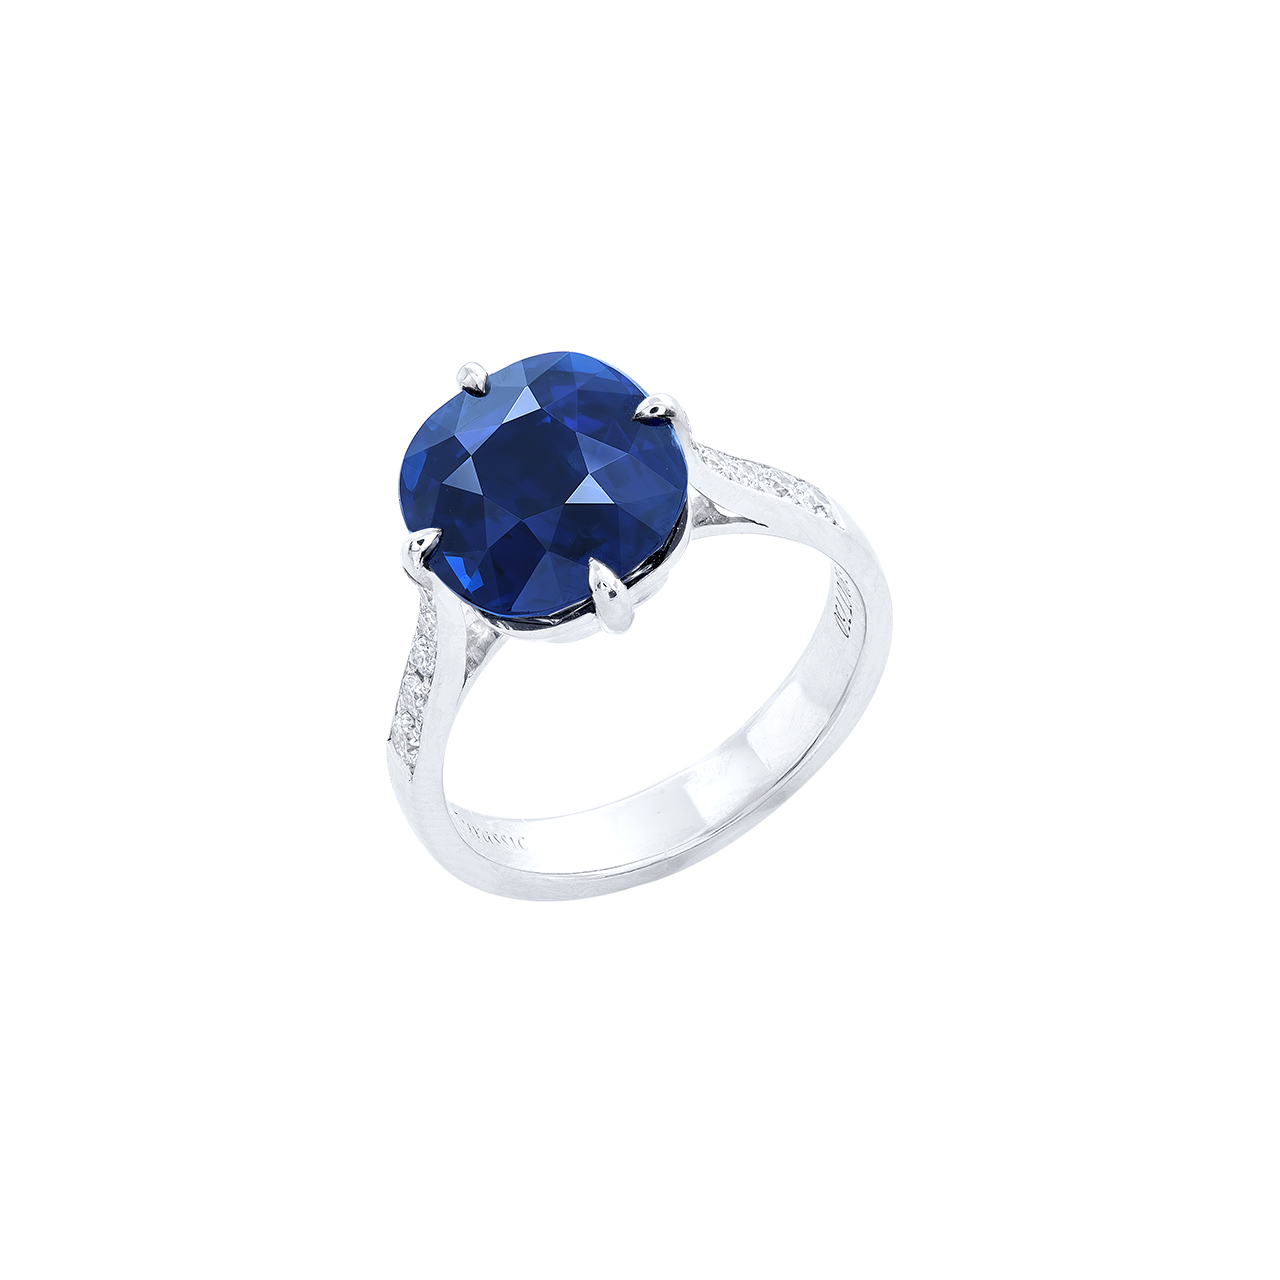 5.80克拉 馬達加斯加 天然無燒藍寶鑽戒
Blue Sapphire from Madagascar 
and Diamond Ring